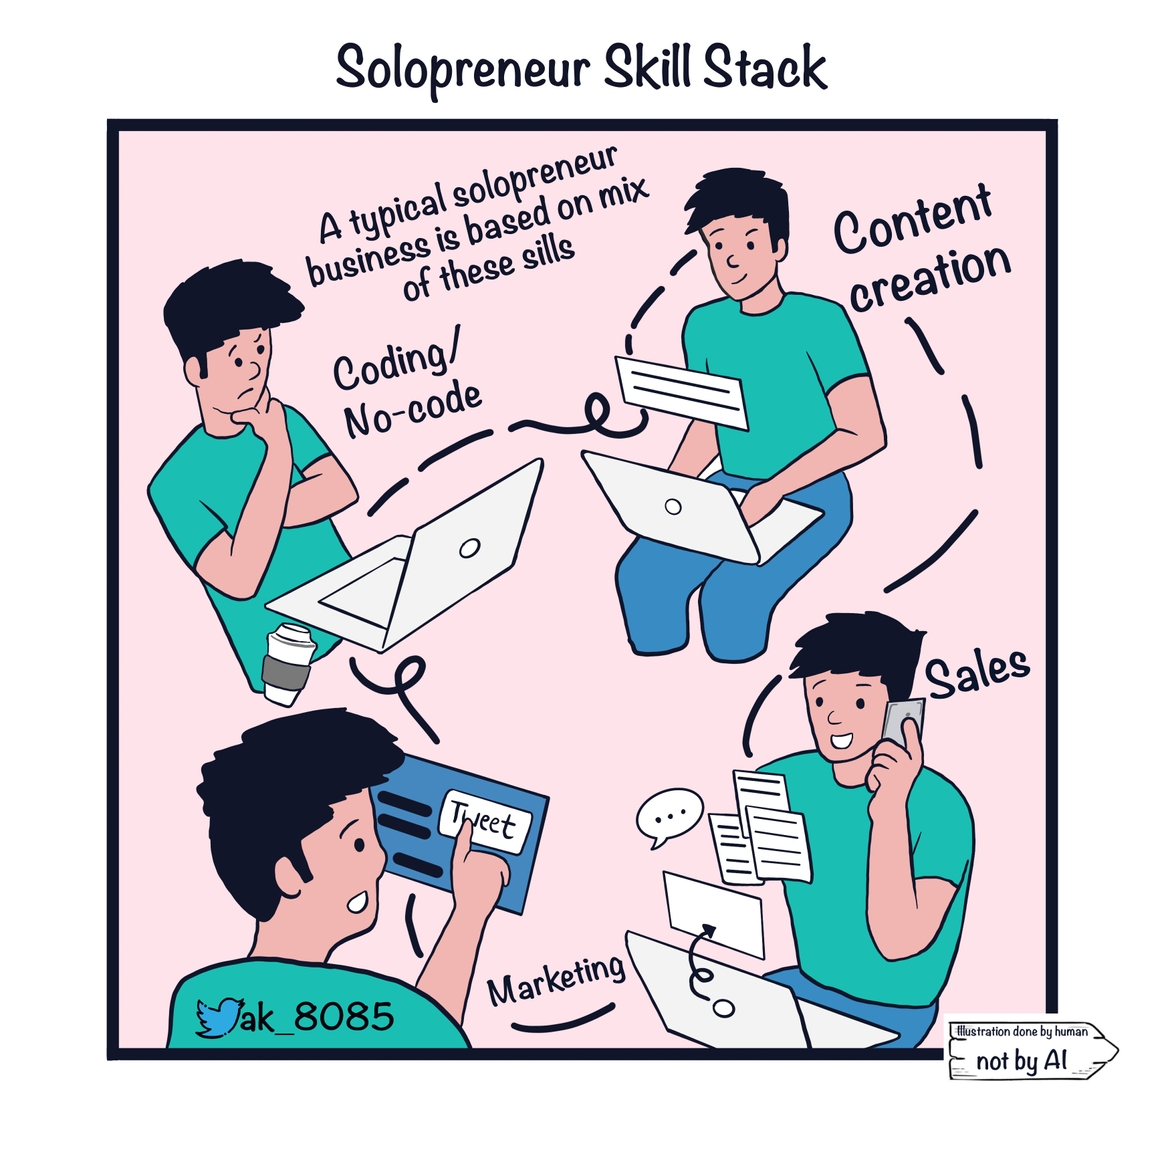 Solopreneur Skill Stack